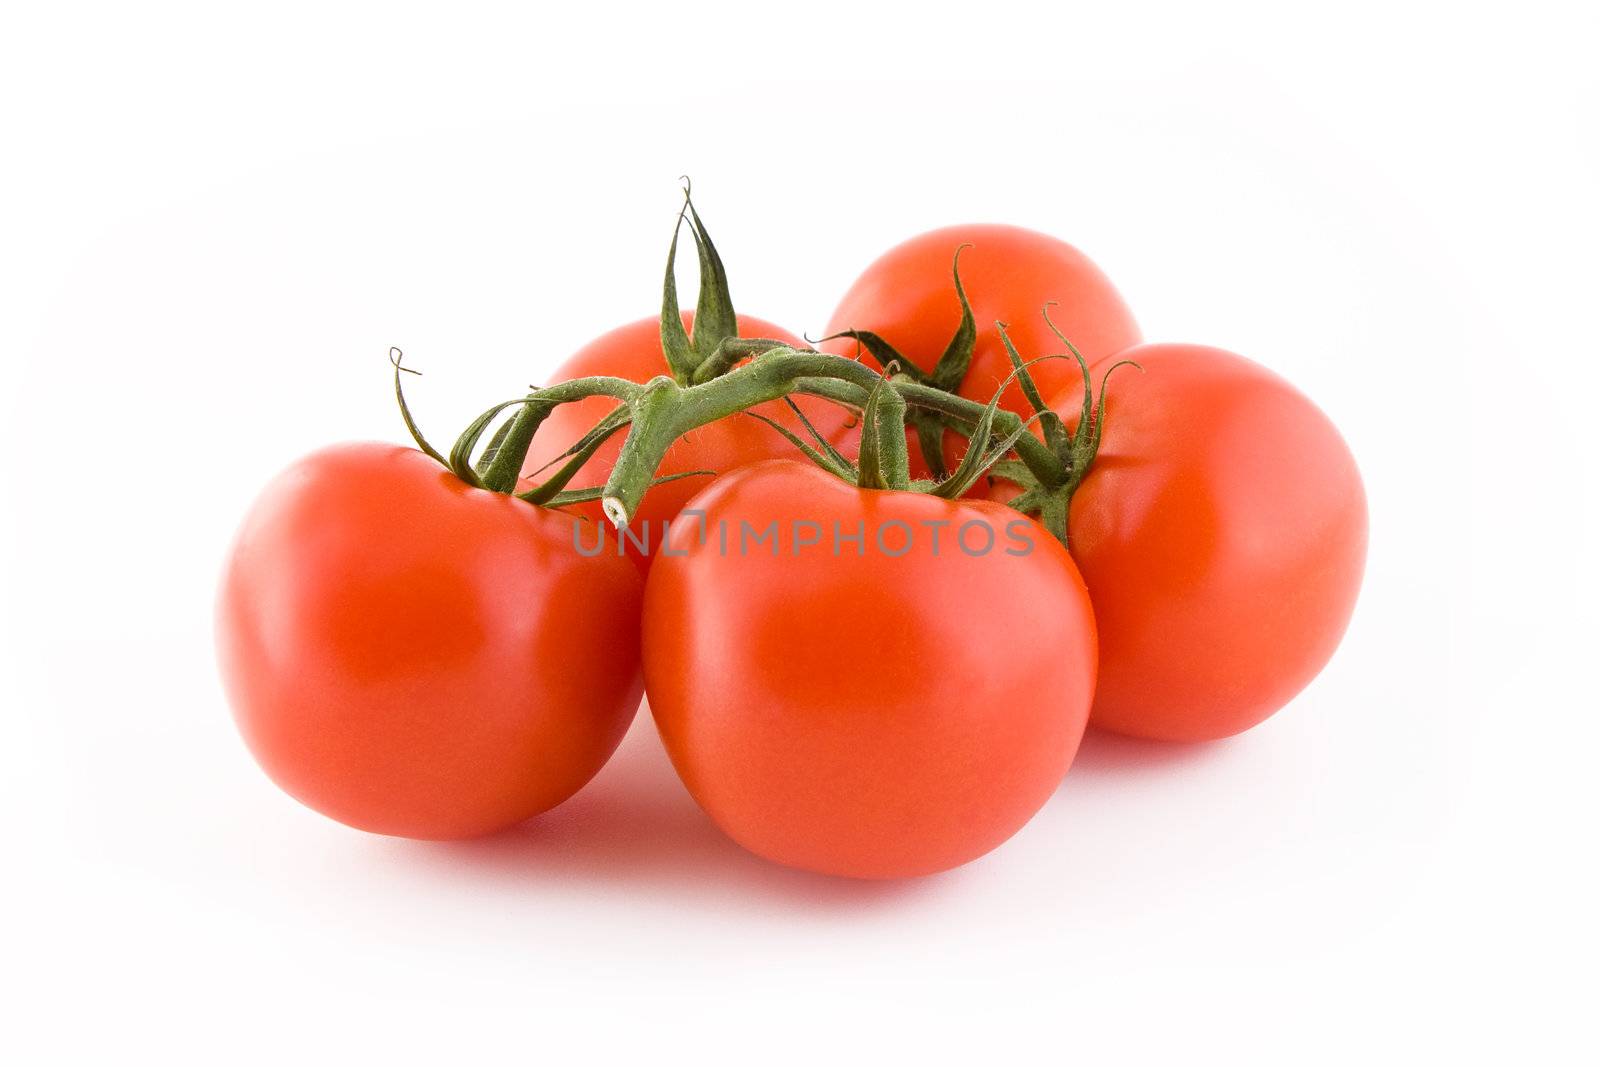 Tomatoes bunch by Gbuglok